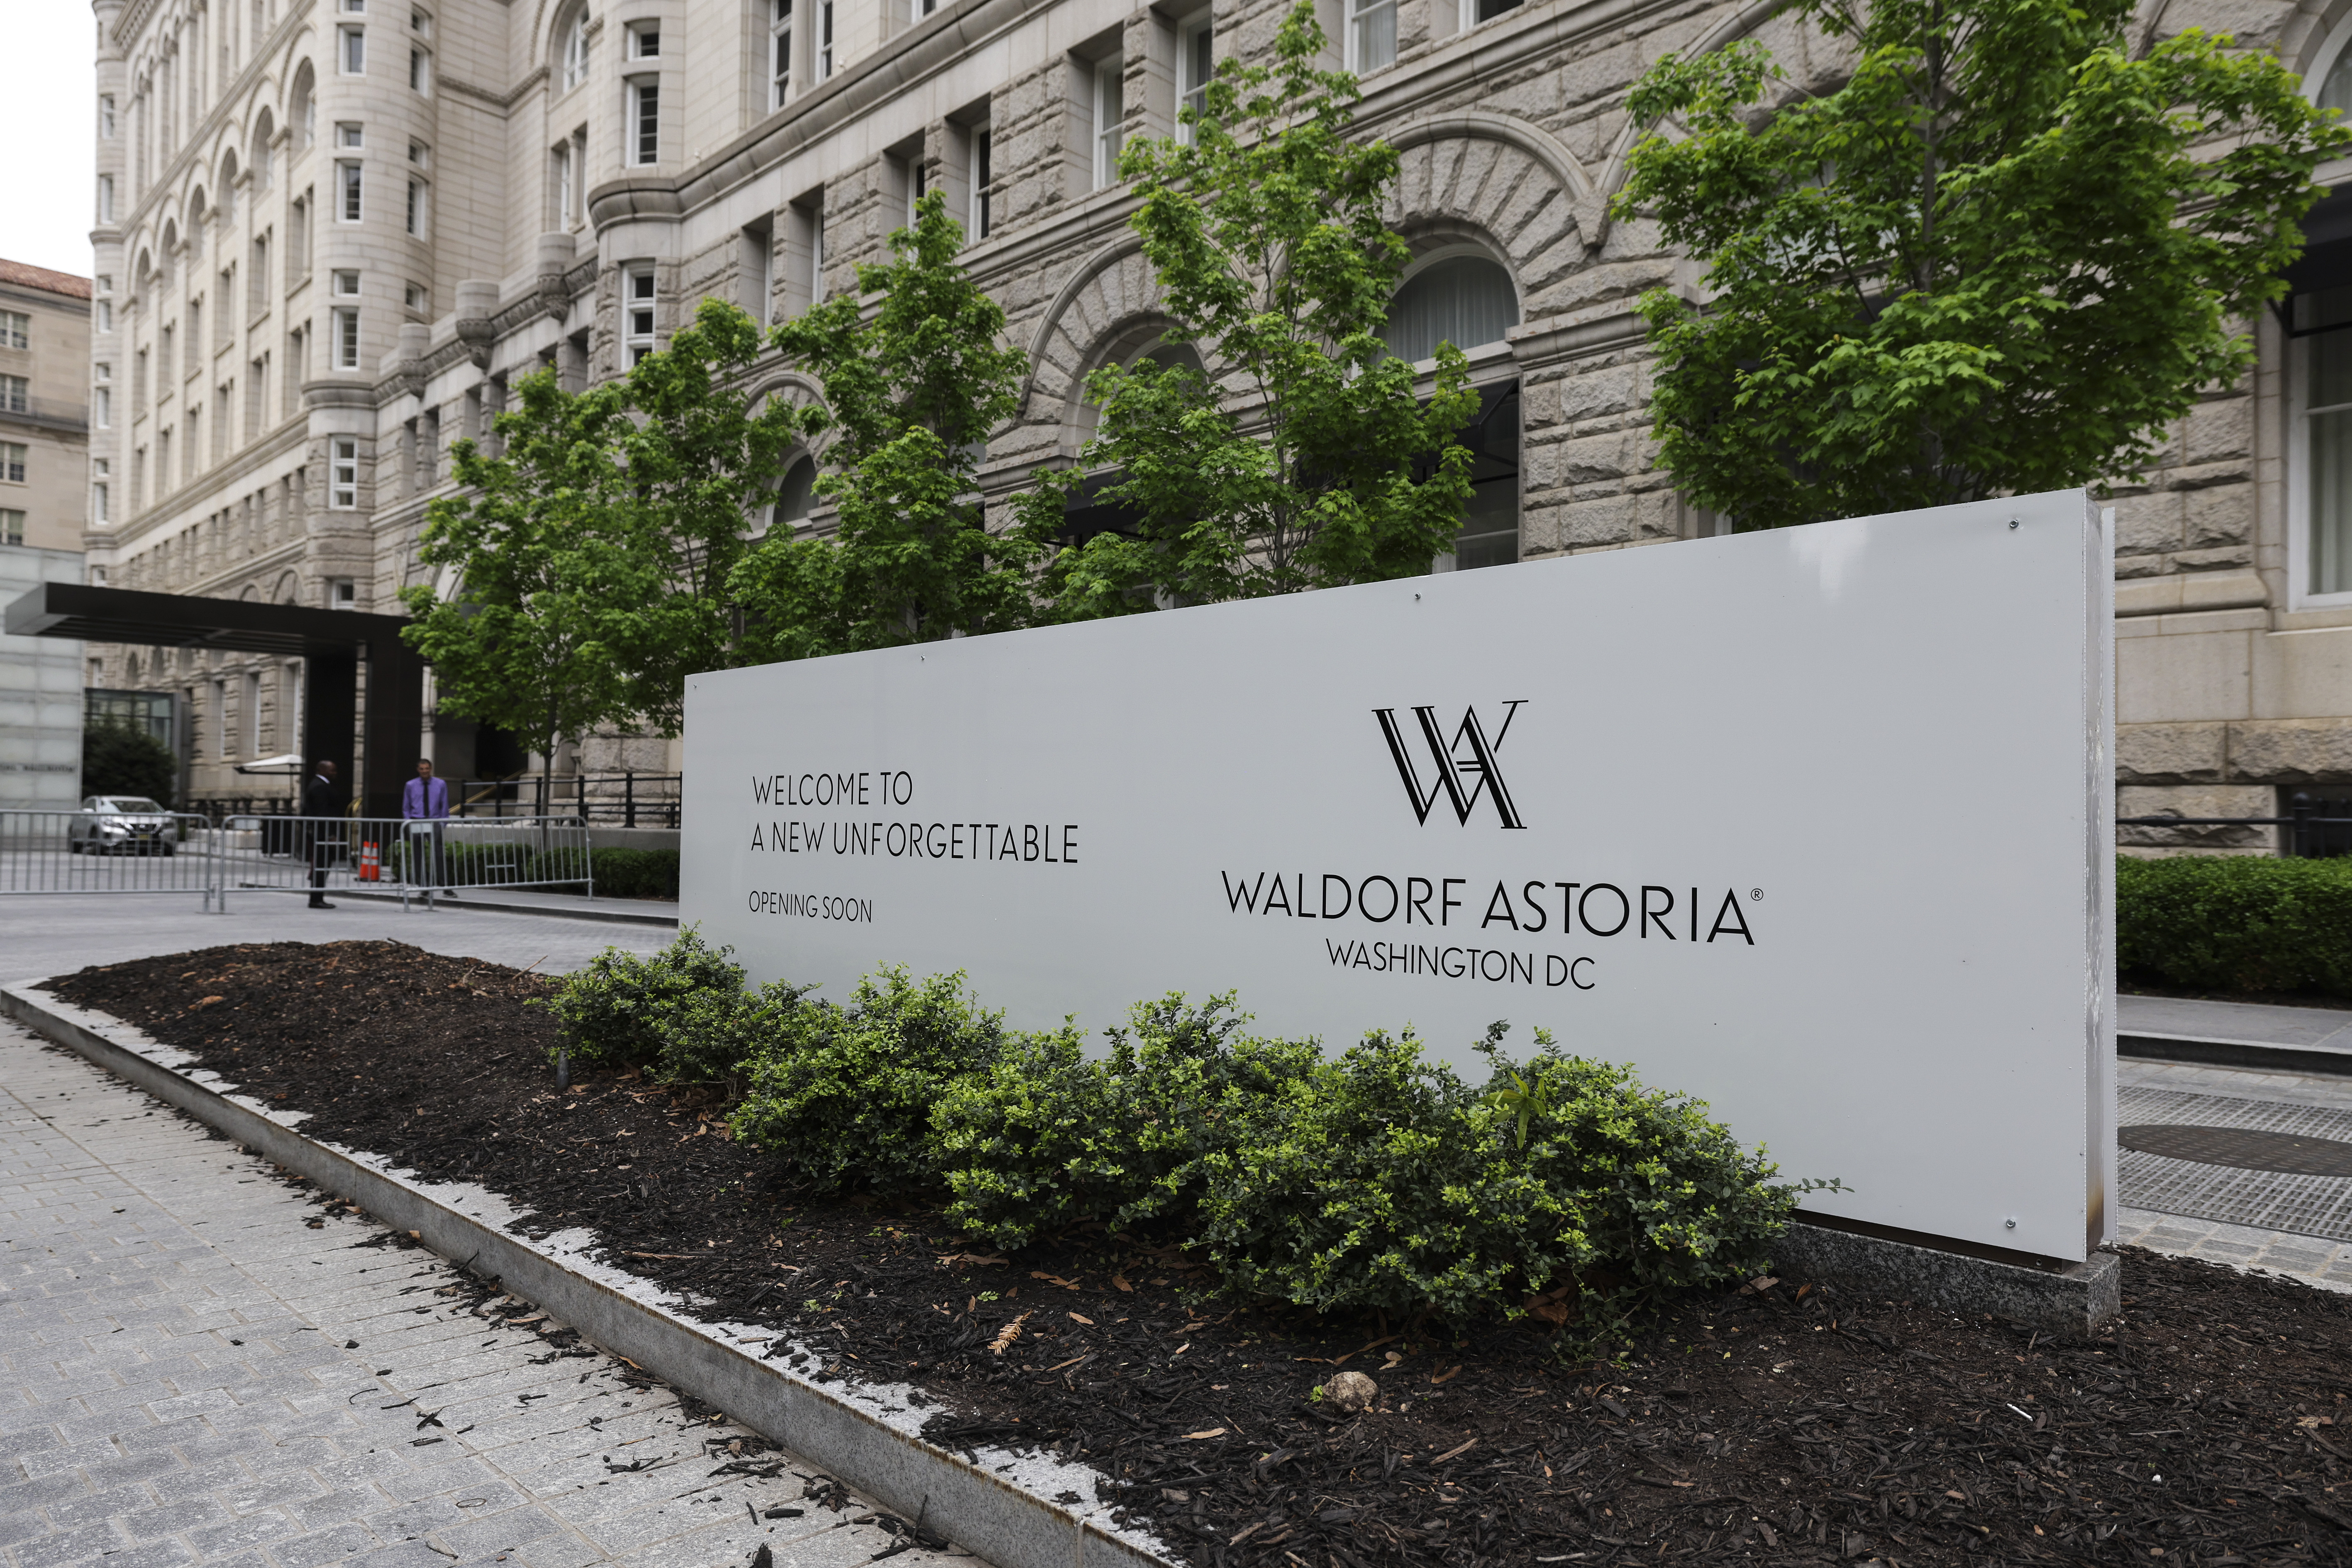 Trump International Hotel In Washington, DC To Become Waldorf Astoria After Sale